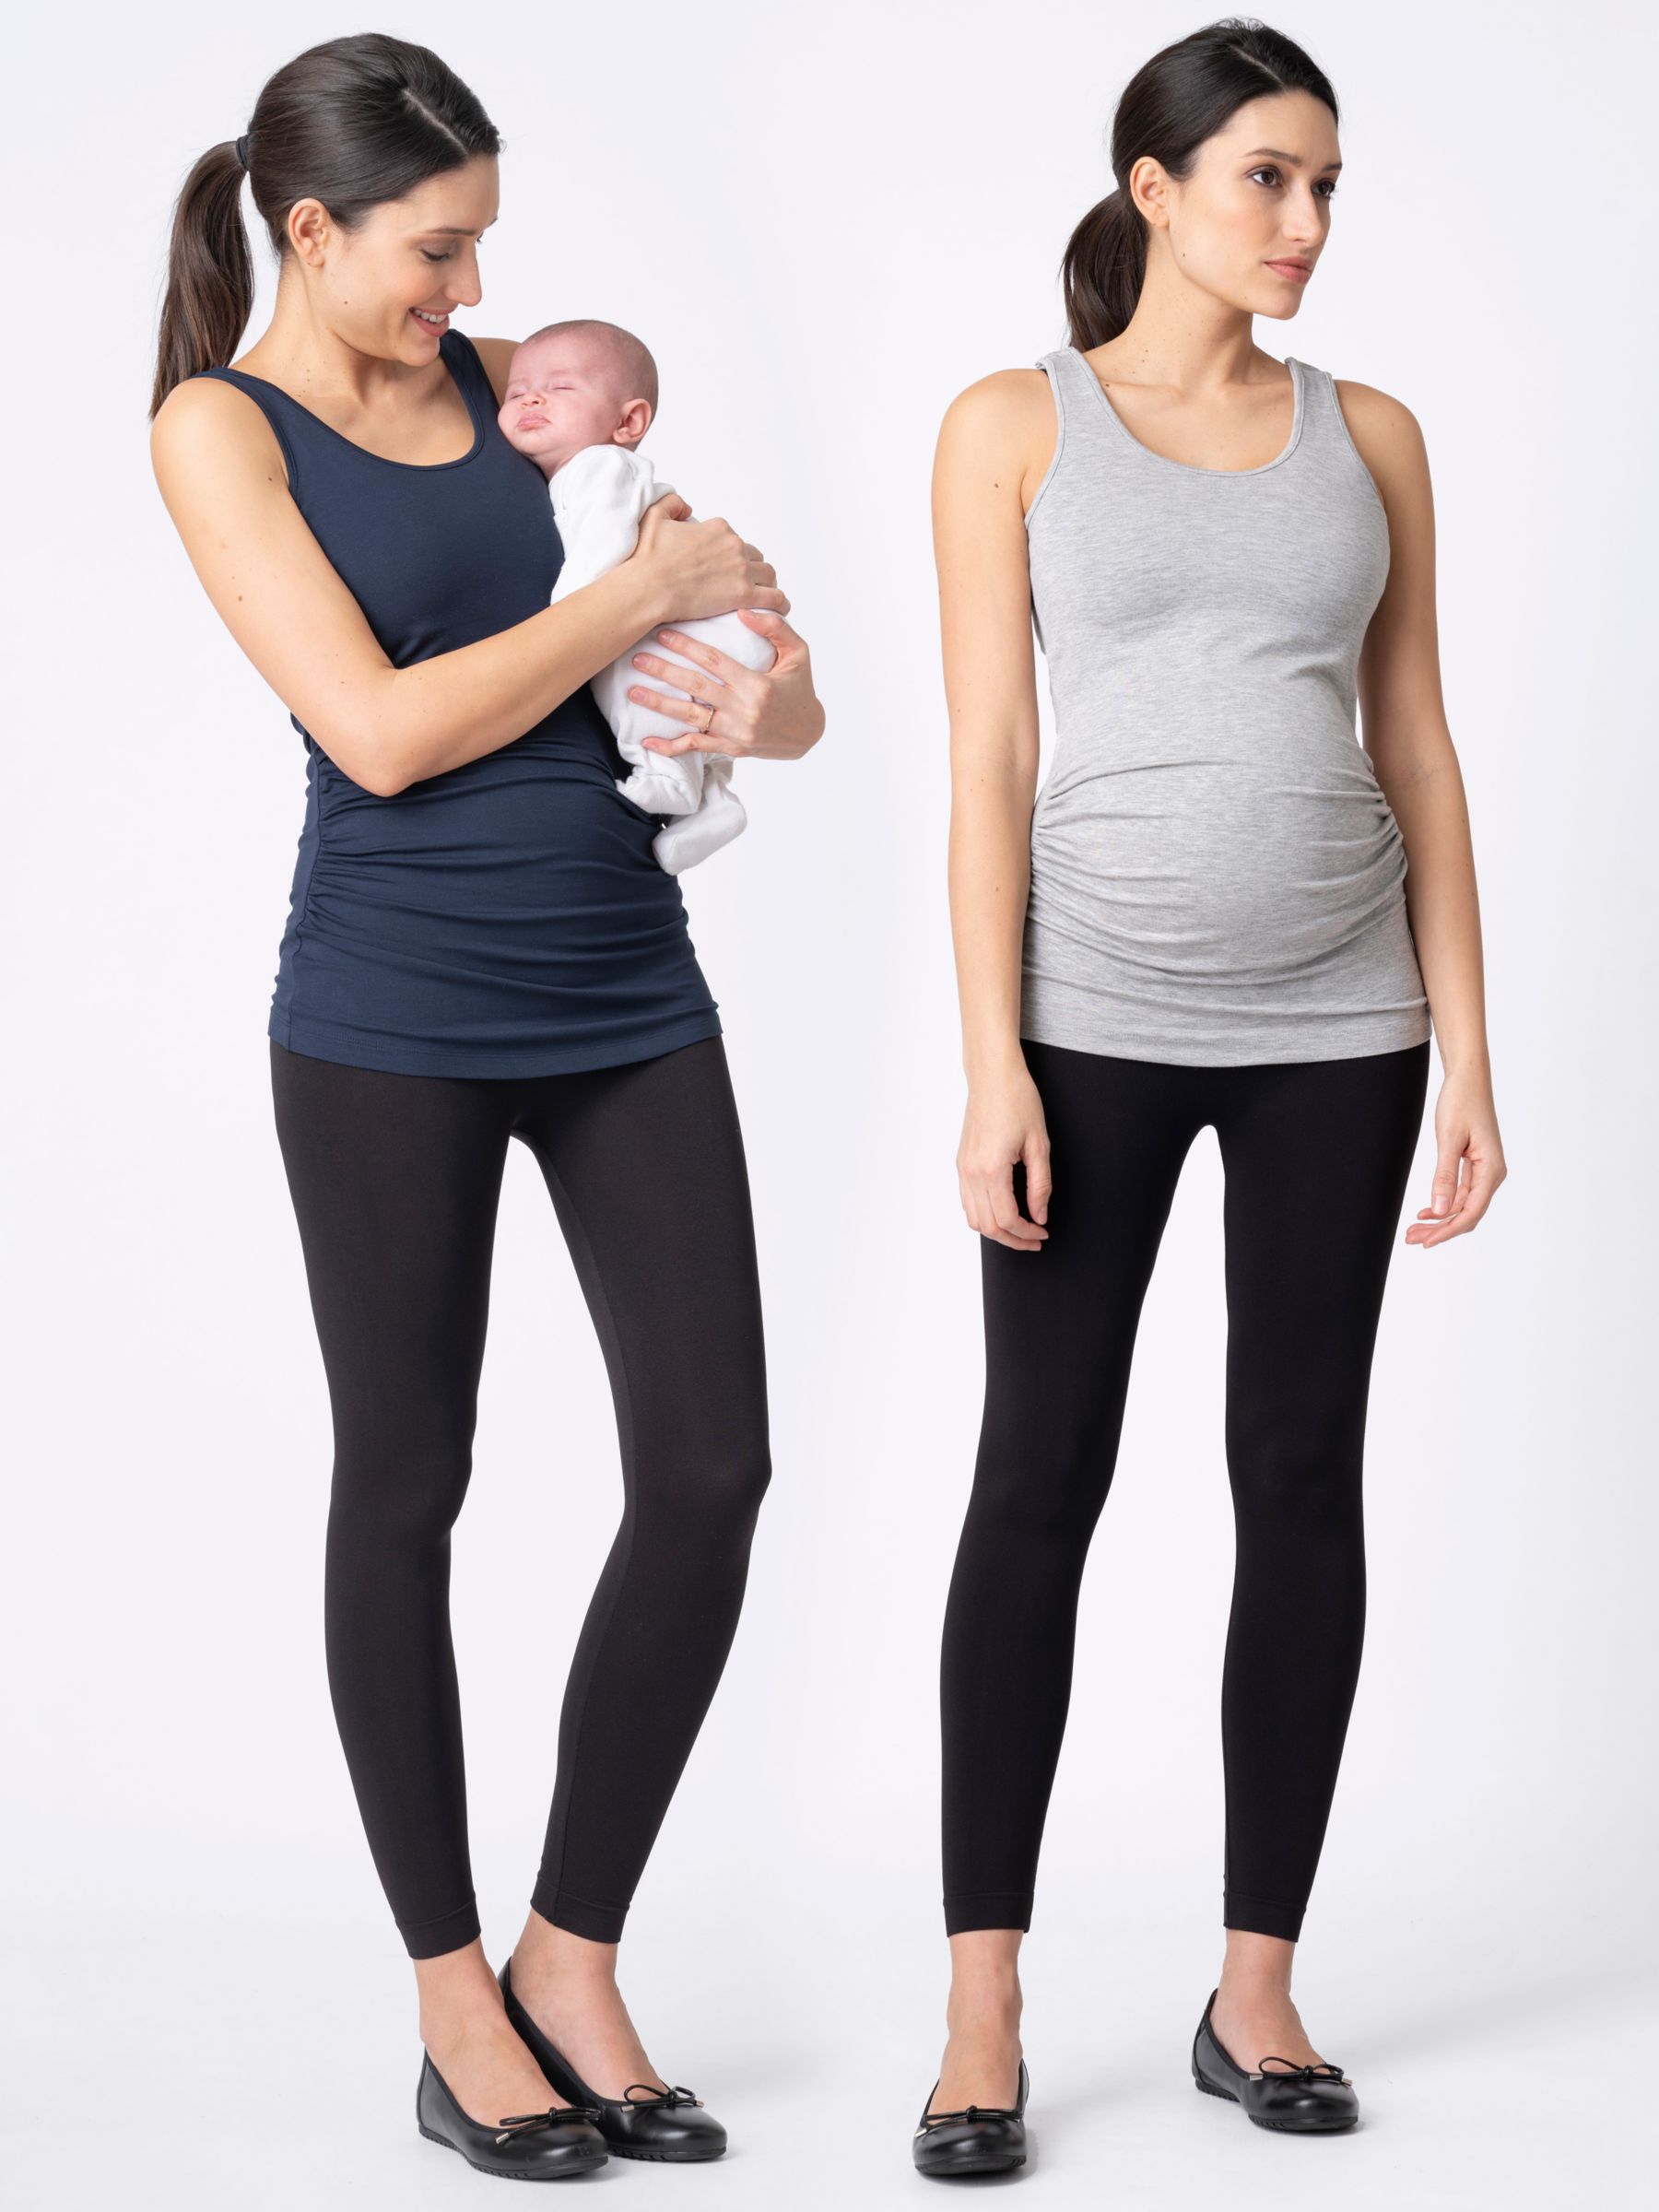 Seraphine Women's Maternity Leggings – Twin Pack (Black/Grey